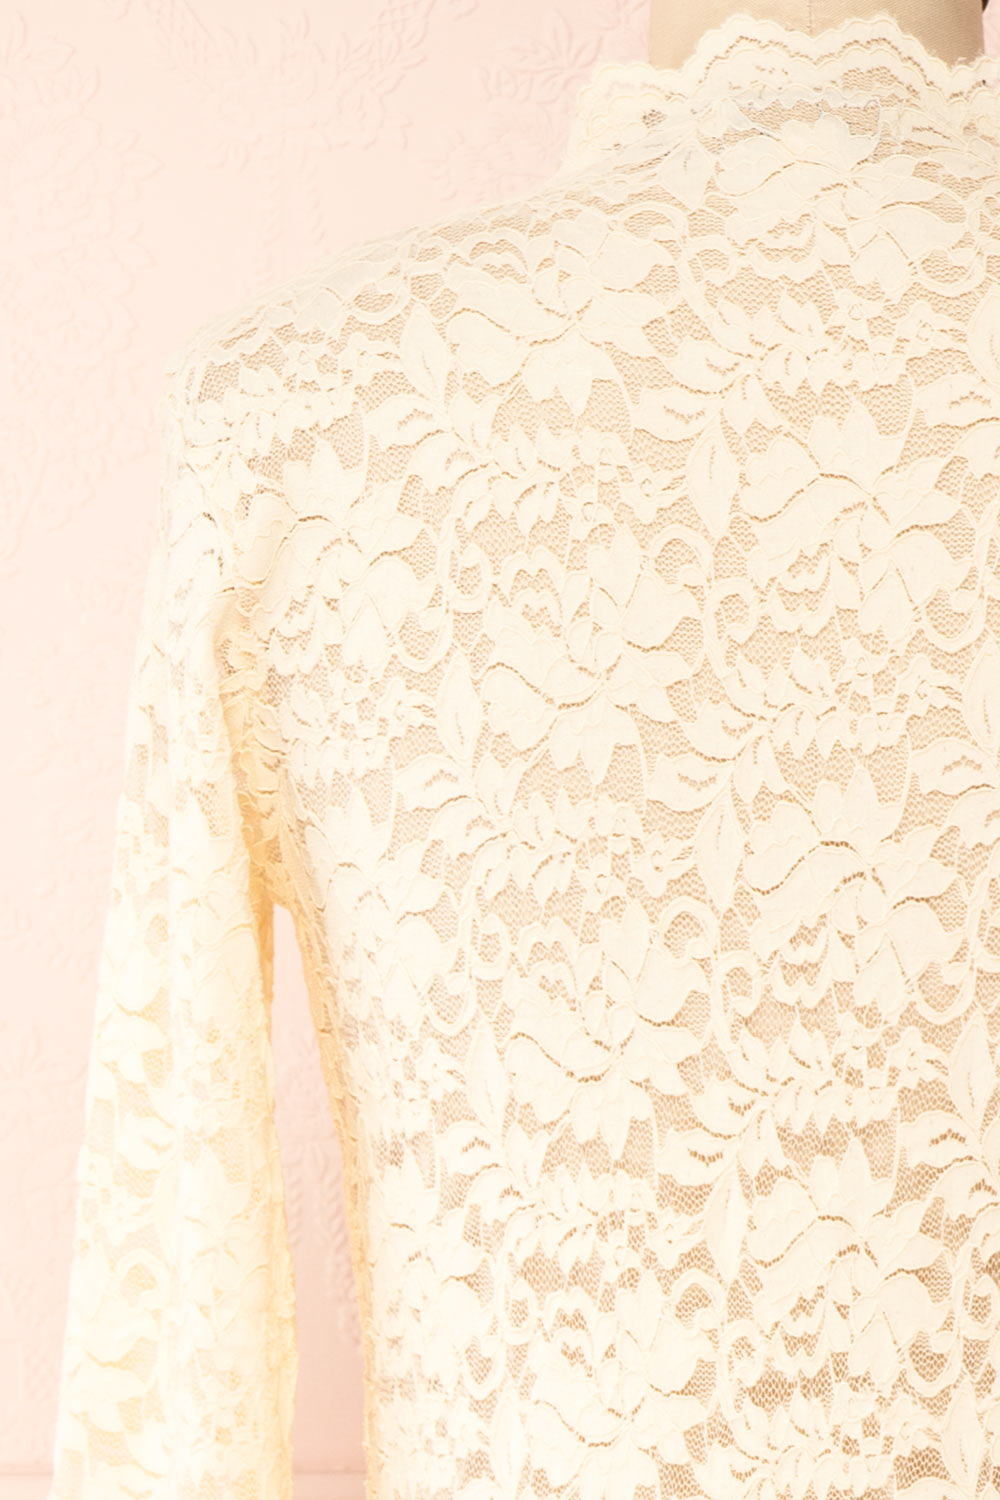 Jokla Cream Lace Mock Neck Top | Boutique 1861 back close-up